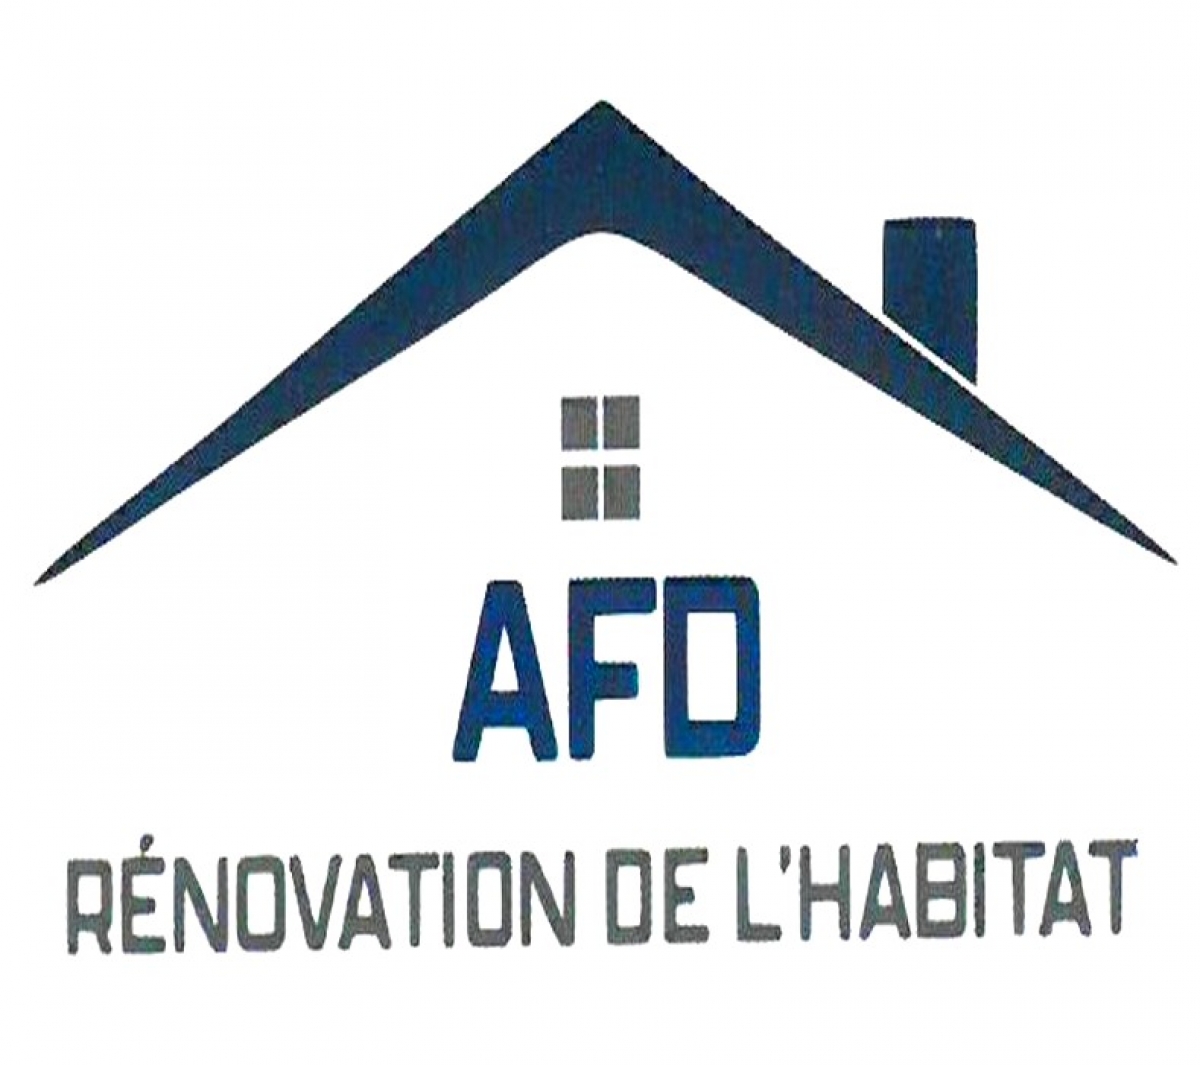 AFD RENOVATION